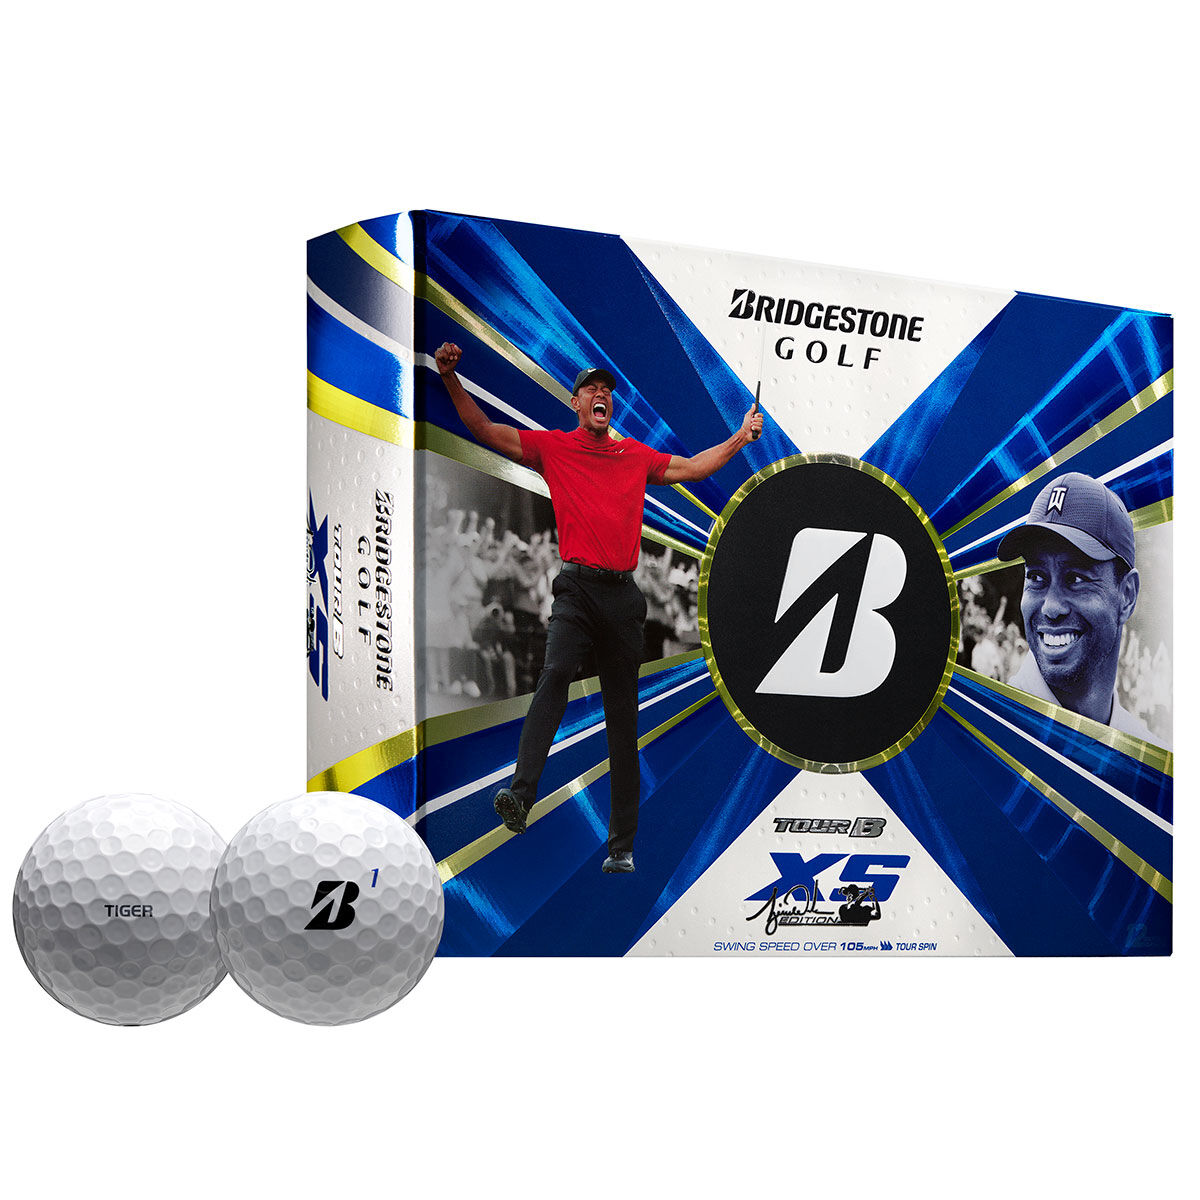 Bridgestone Tour B XS Tiger Woods 12 Golf Ball Pack from american golf